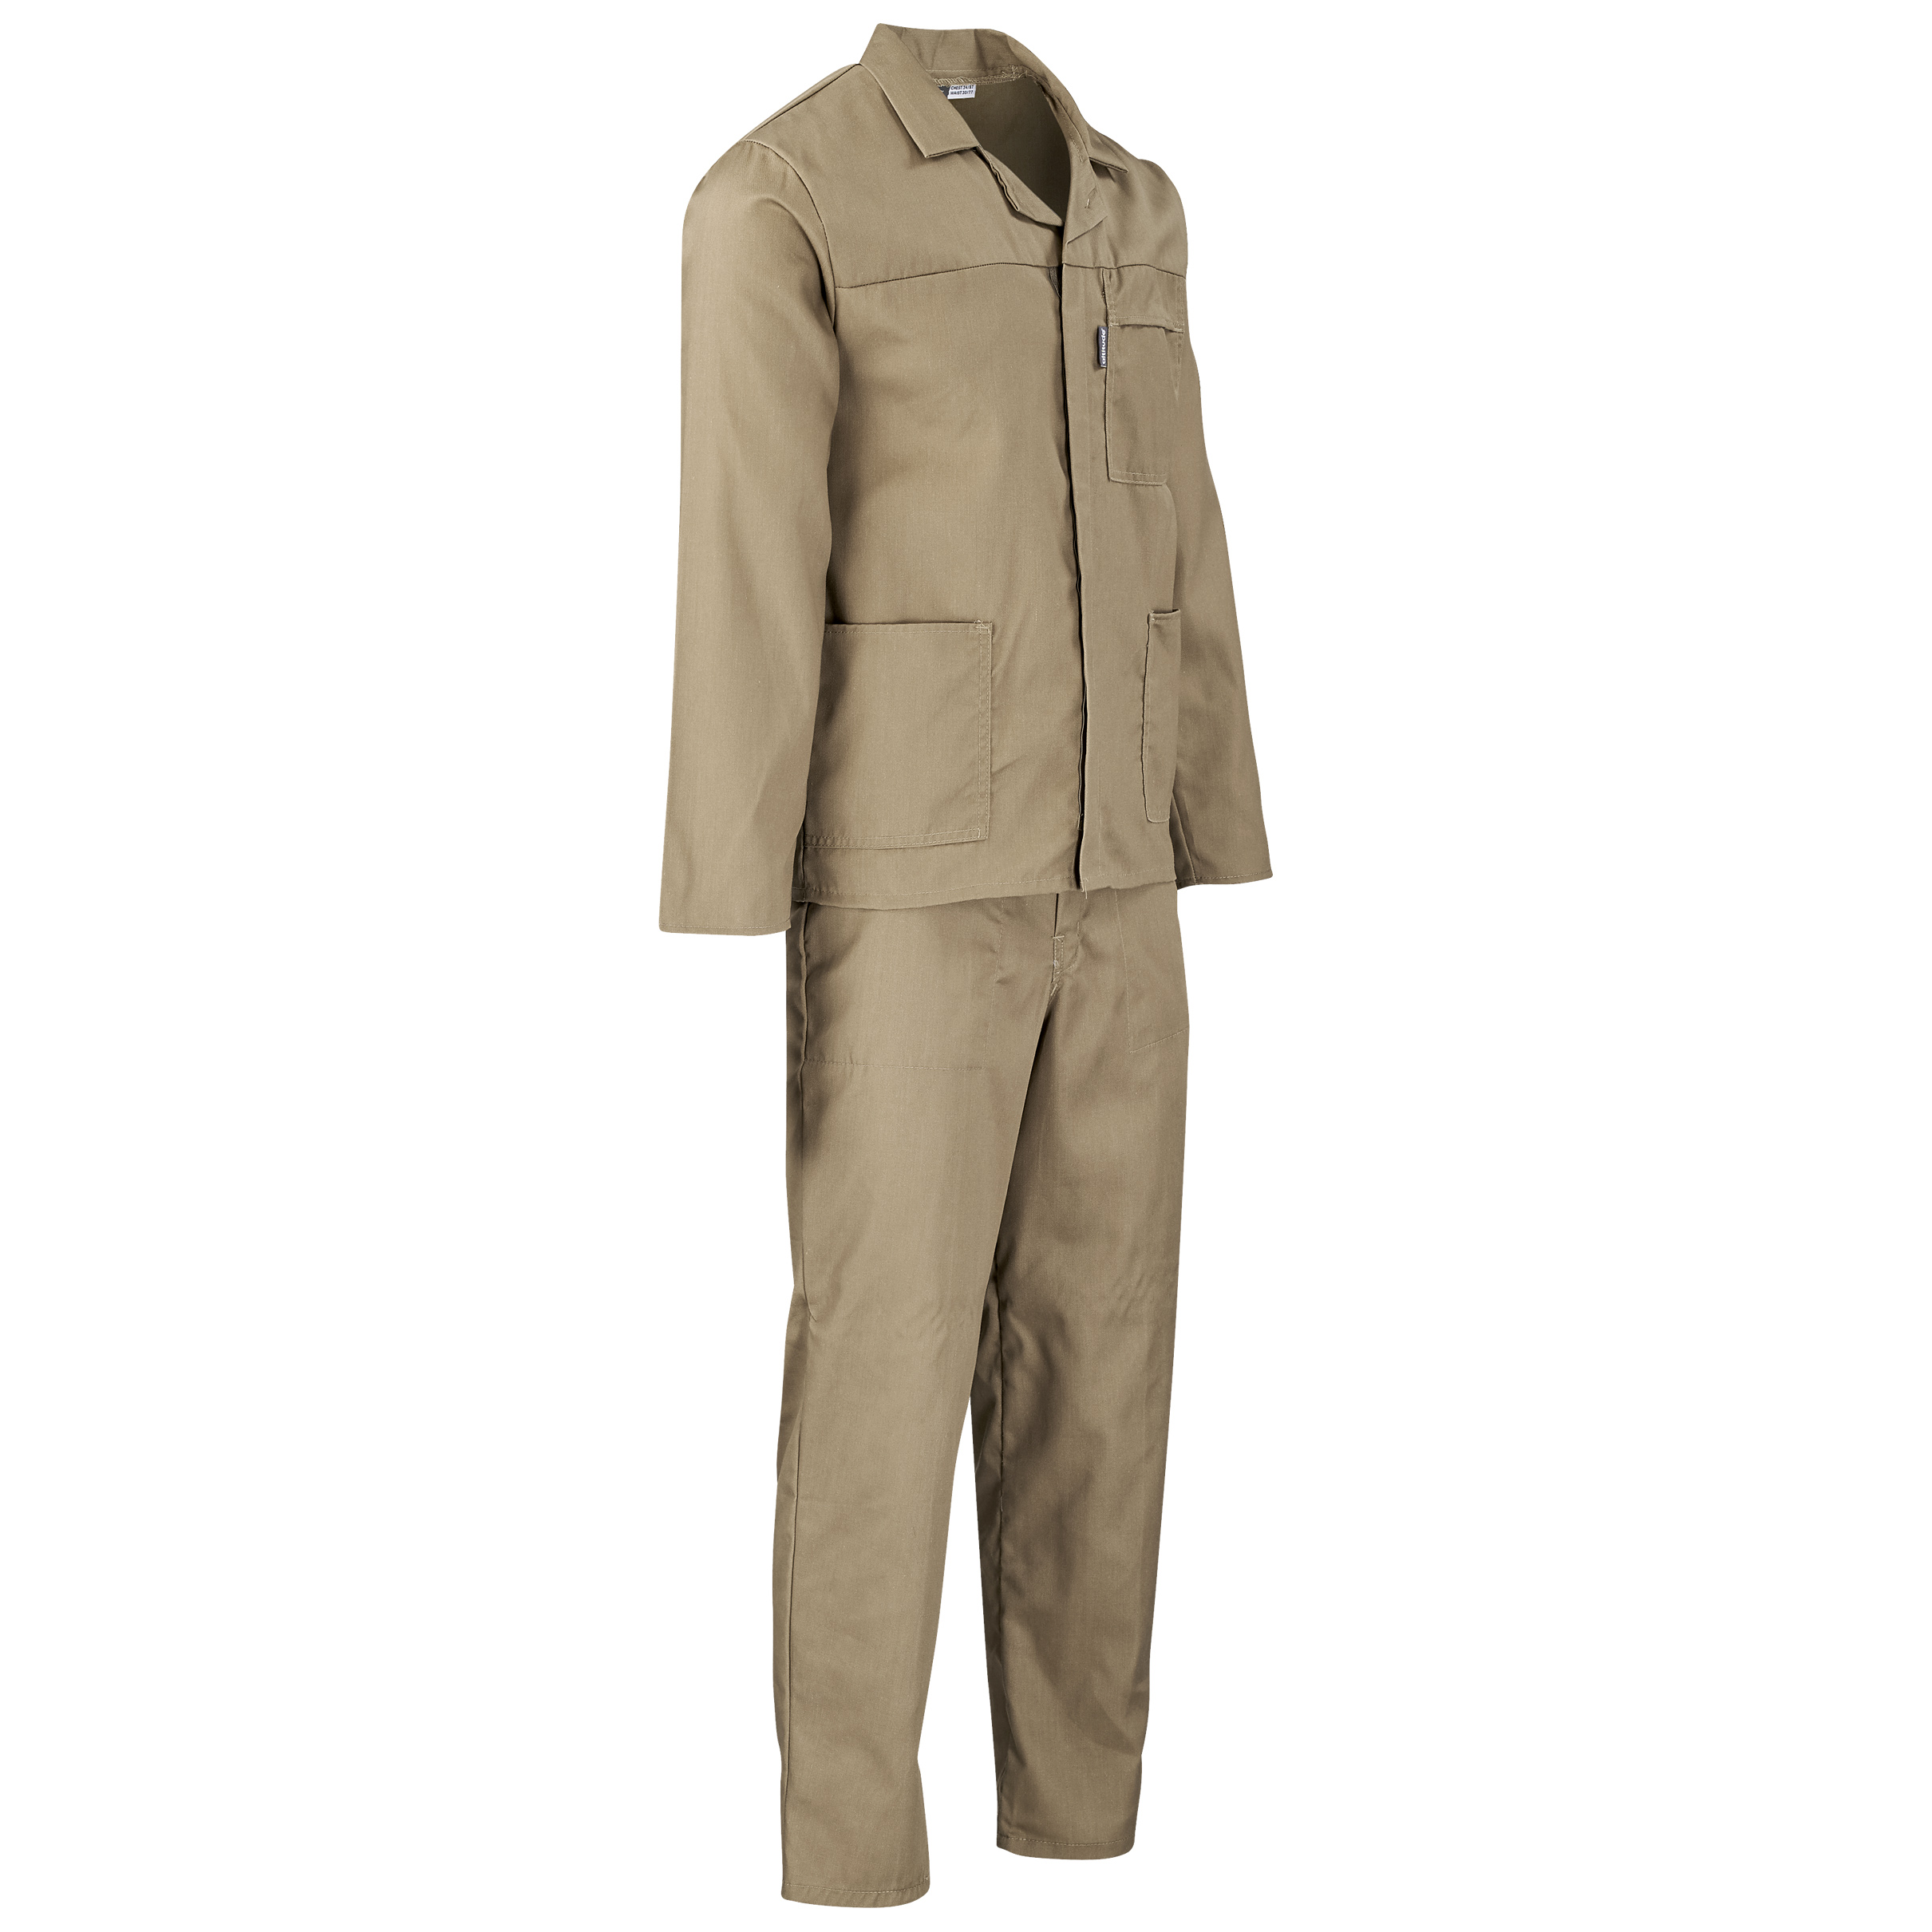 Trade Polycotton Conti Suit khaki ALT-1101-KH-GHSI_default by brandxellence workwear